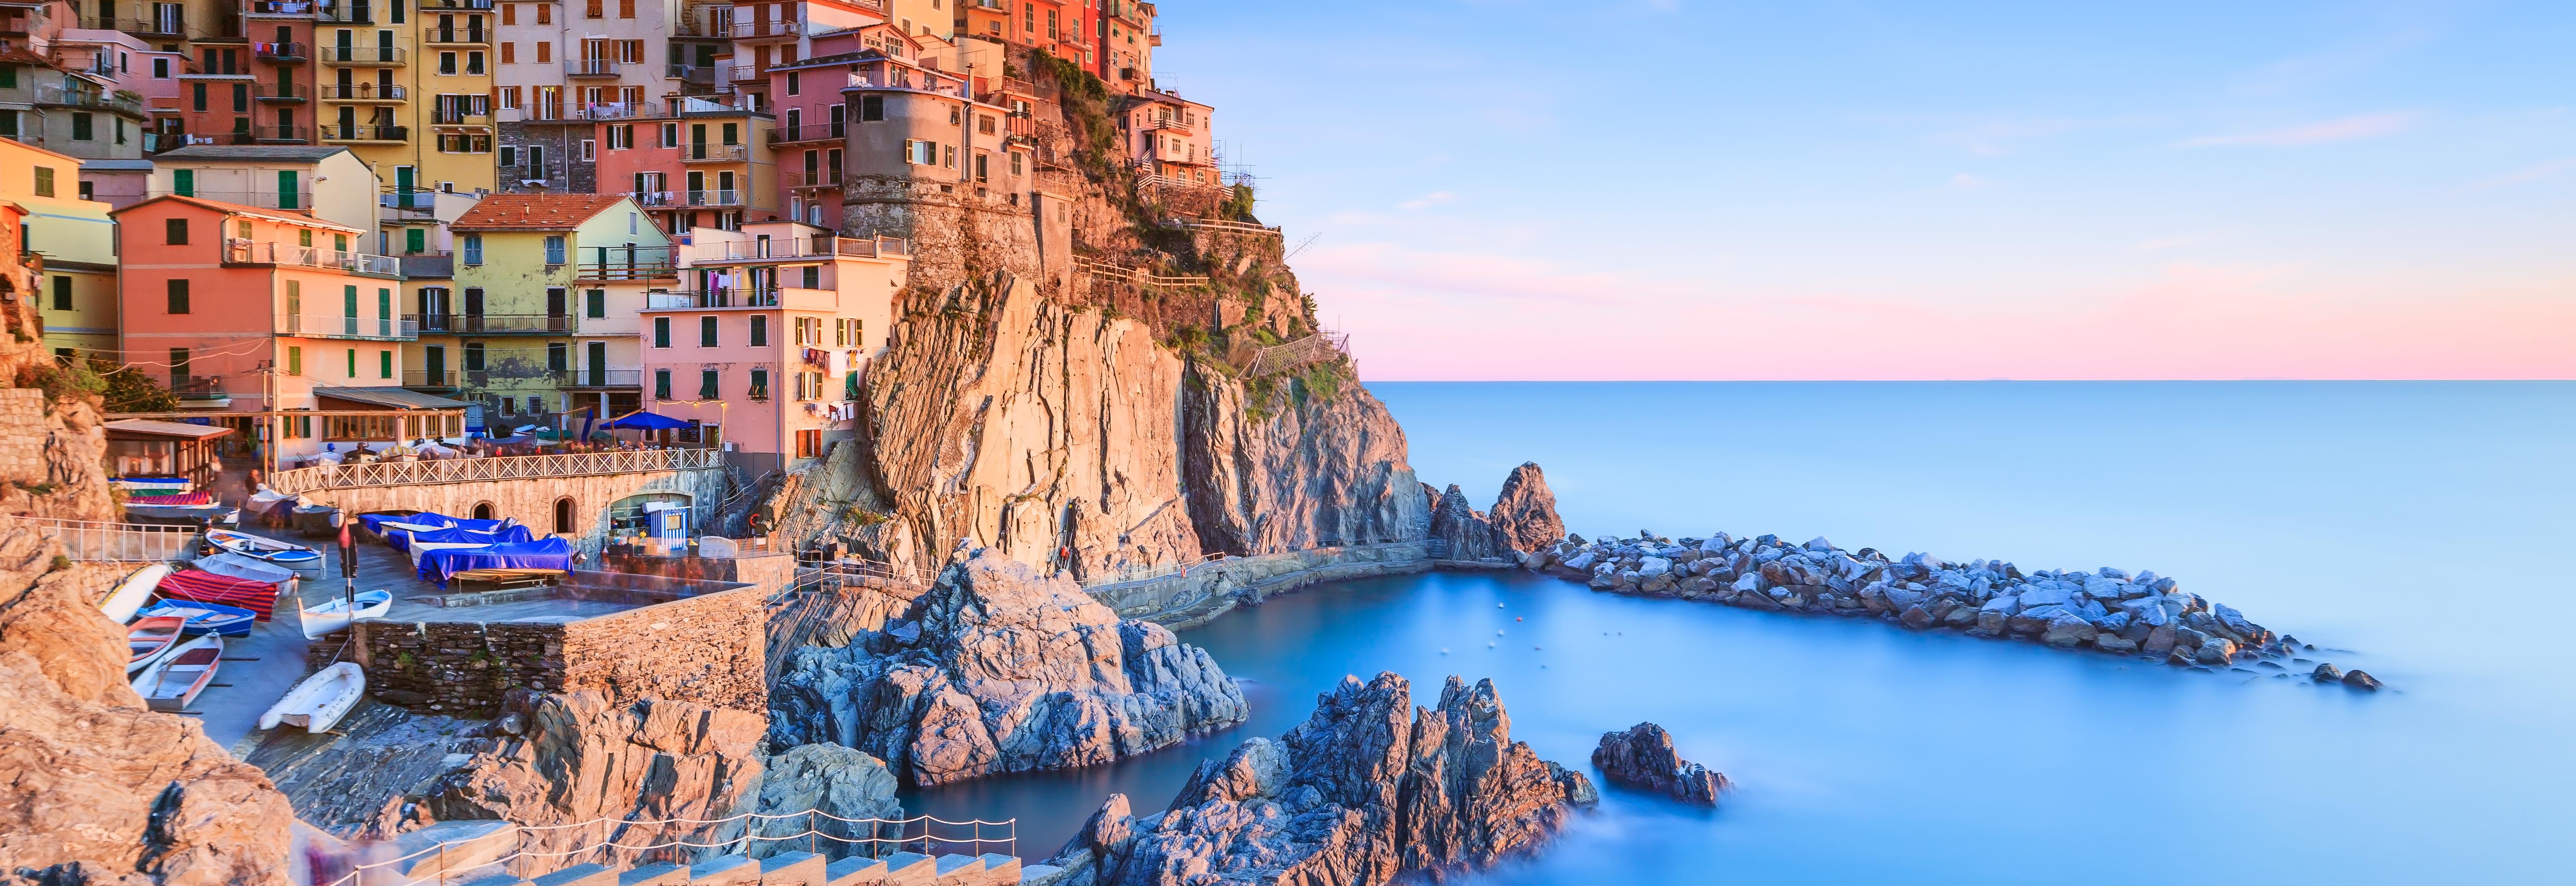 Trip to the Cinque Terre